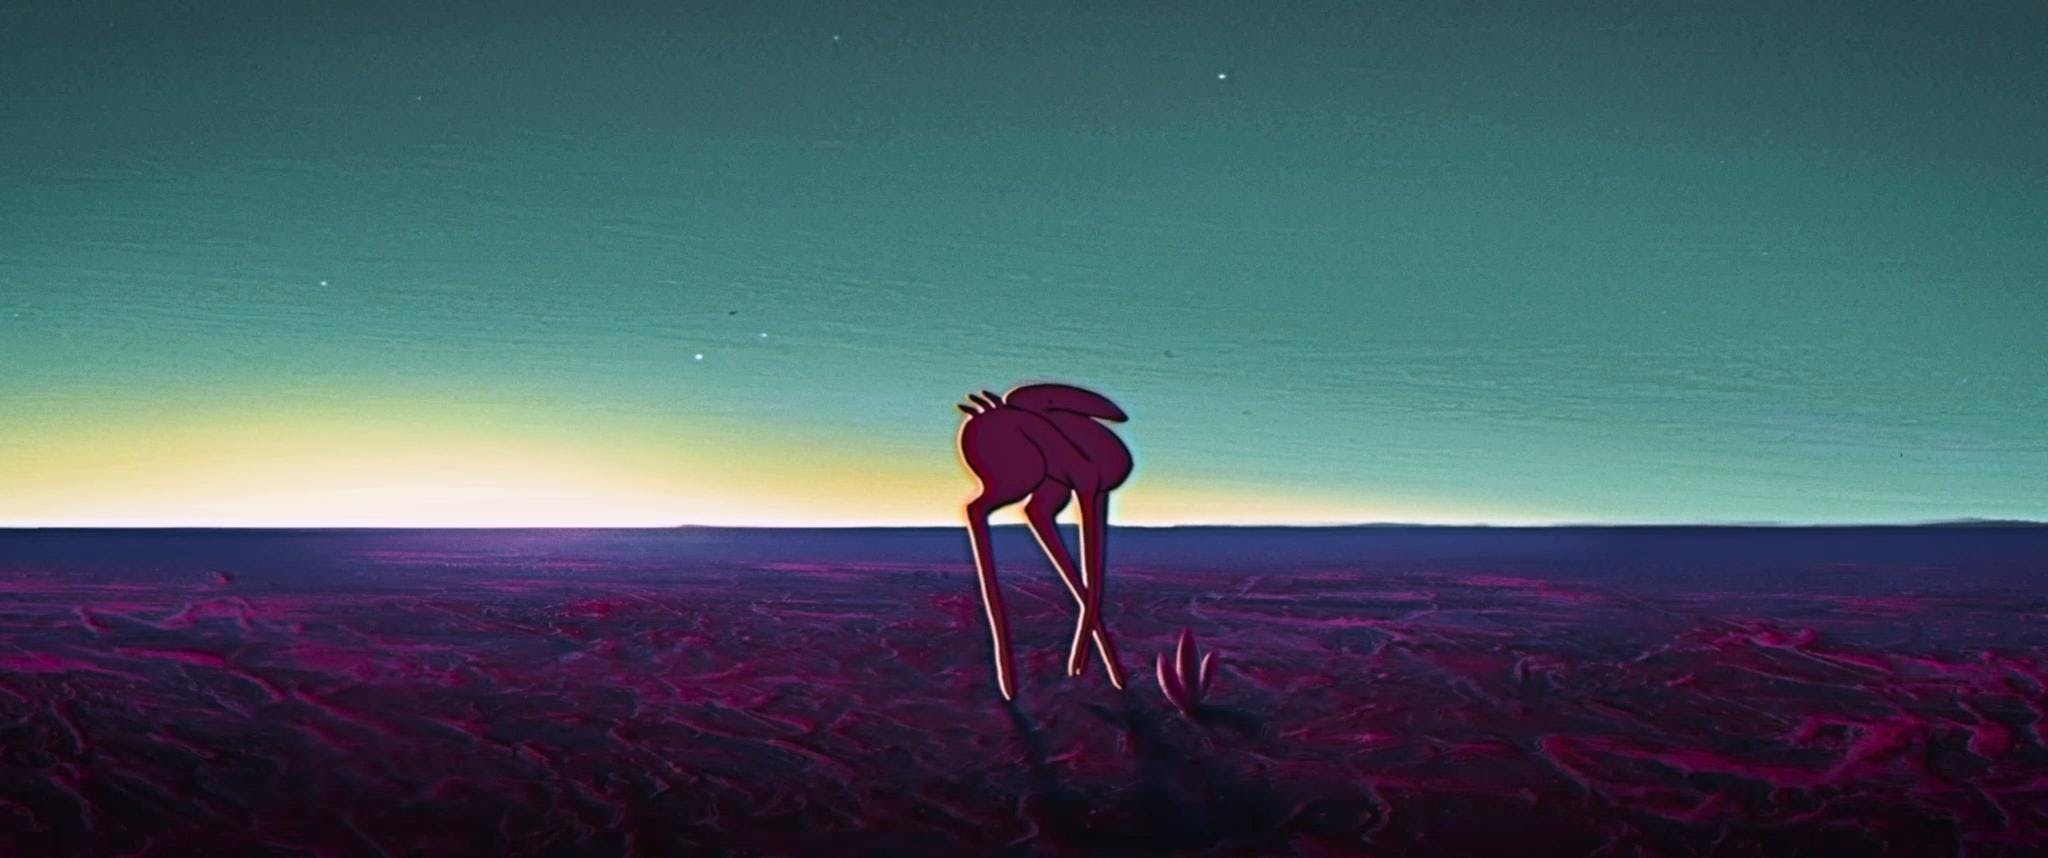 A strange, long-legged creature walks across a vast, barren landscape as the sun sits just below the horizon.